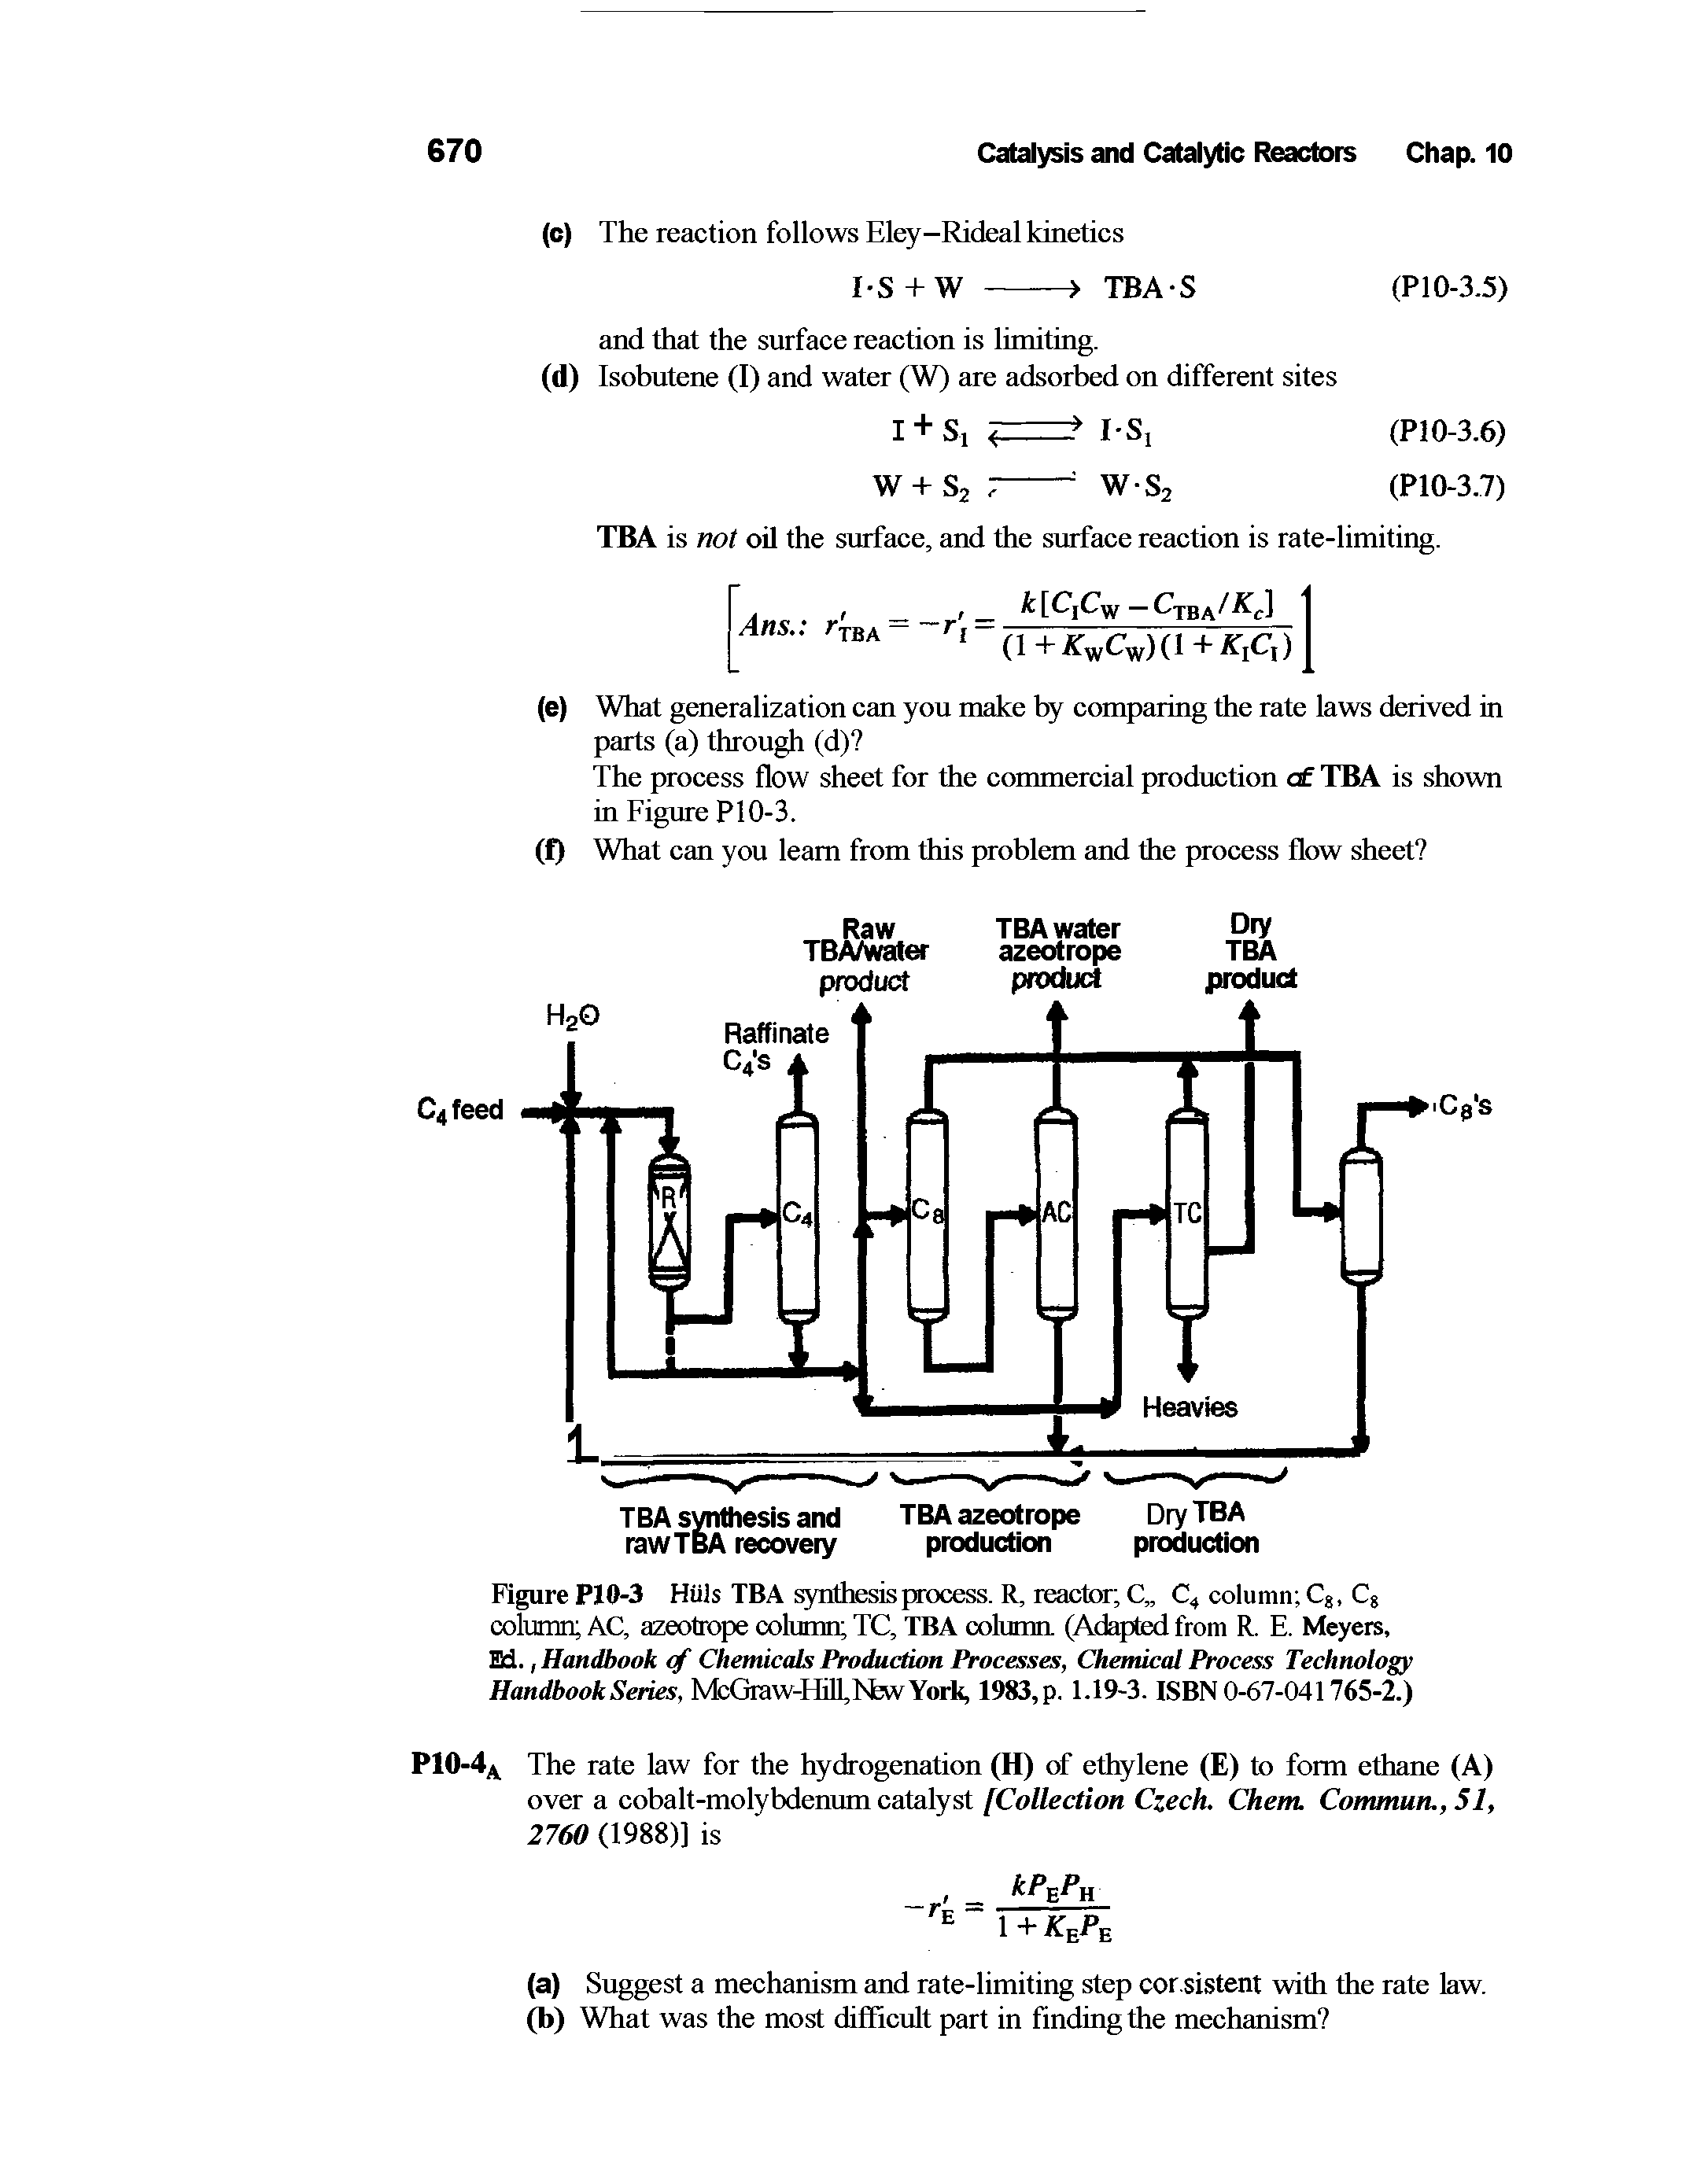 Figure PlO-3 Hiils TBA synthesis process. R, reactor C C4 column Cg, Cg column AC, azeotrope column TC, TBA column (Adapted from R. E. Meyers,...